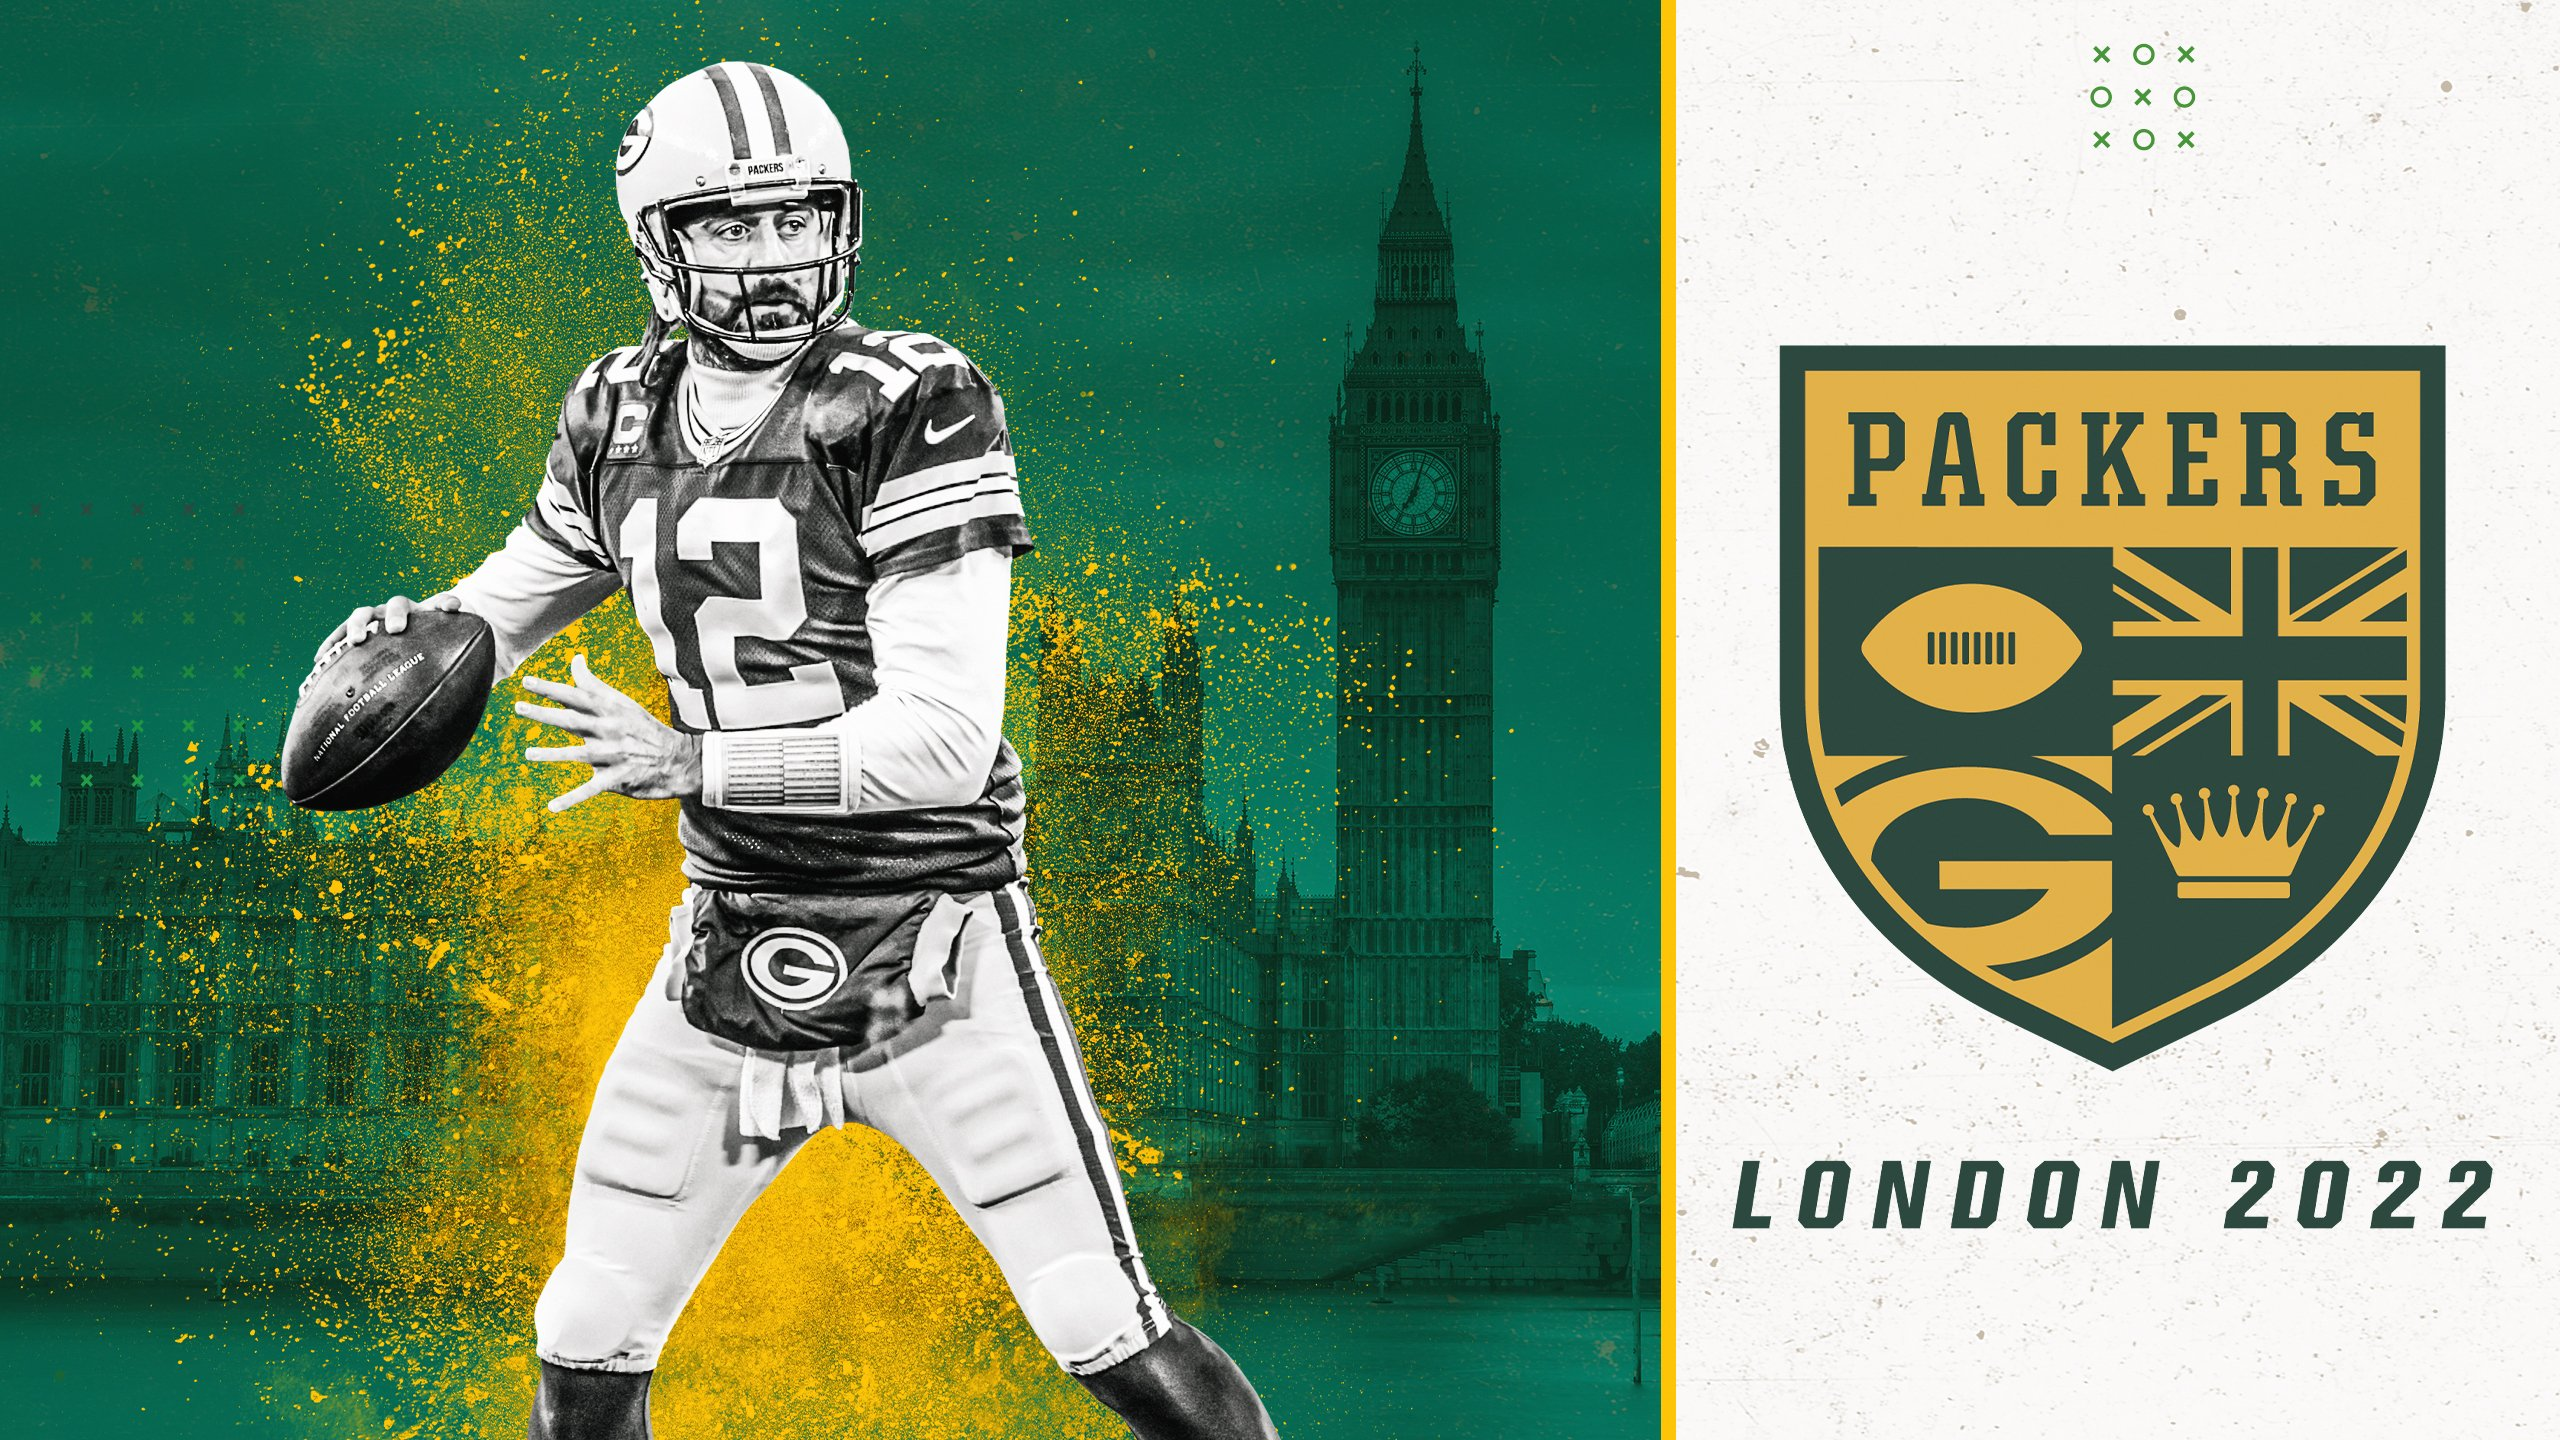 Green Bay Packers, NFL, London series 2022